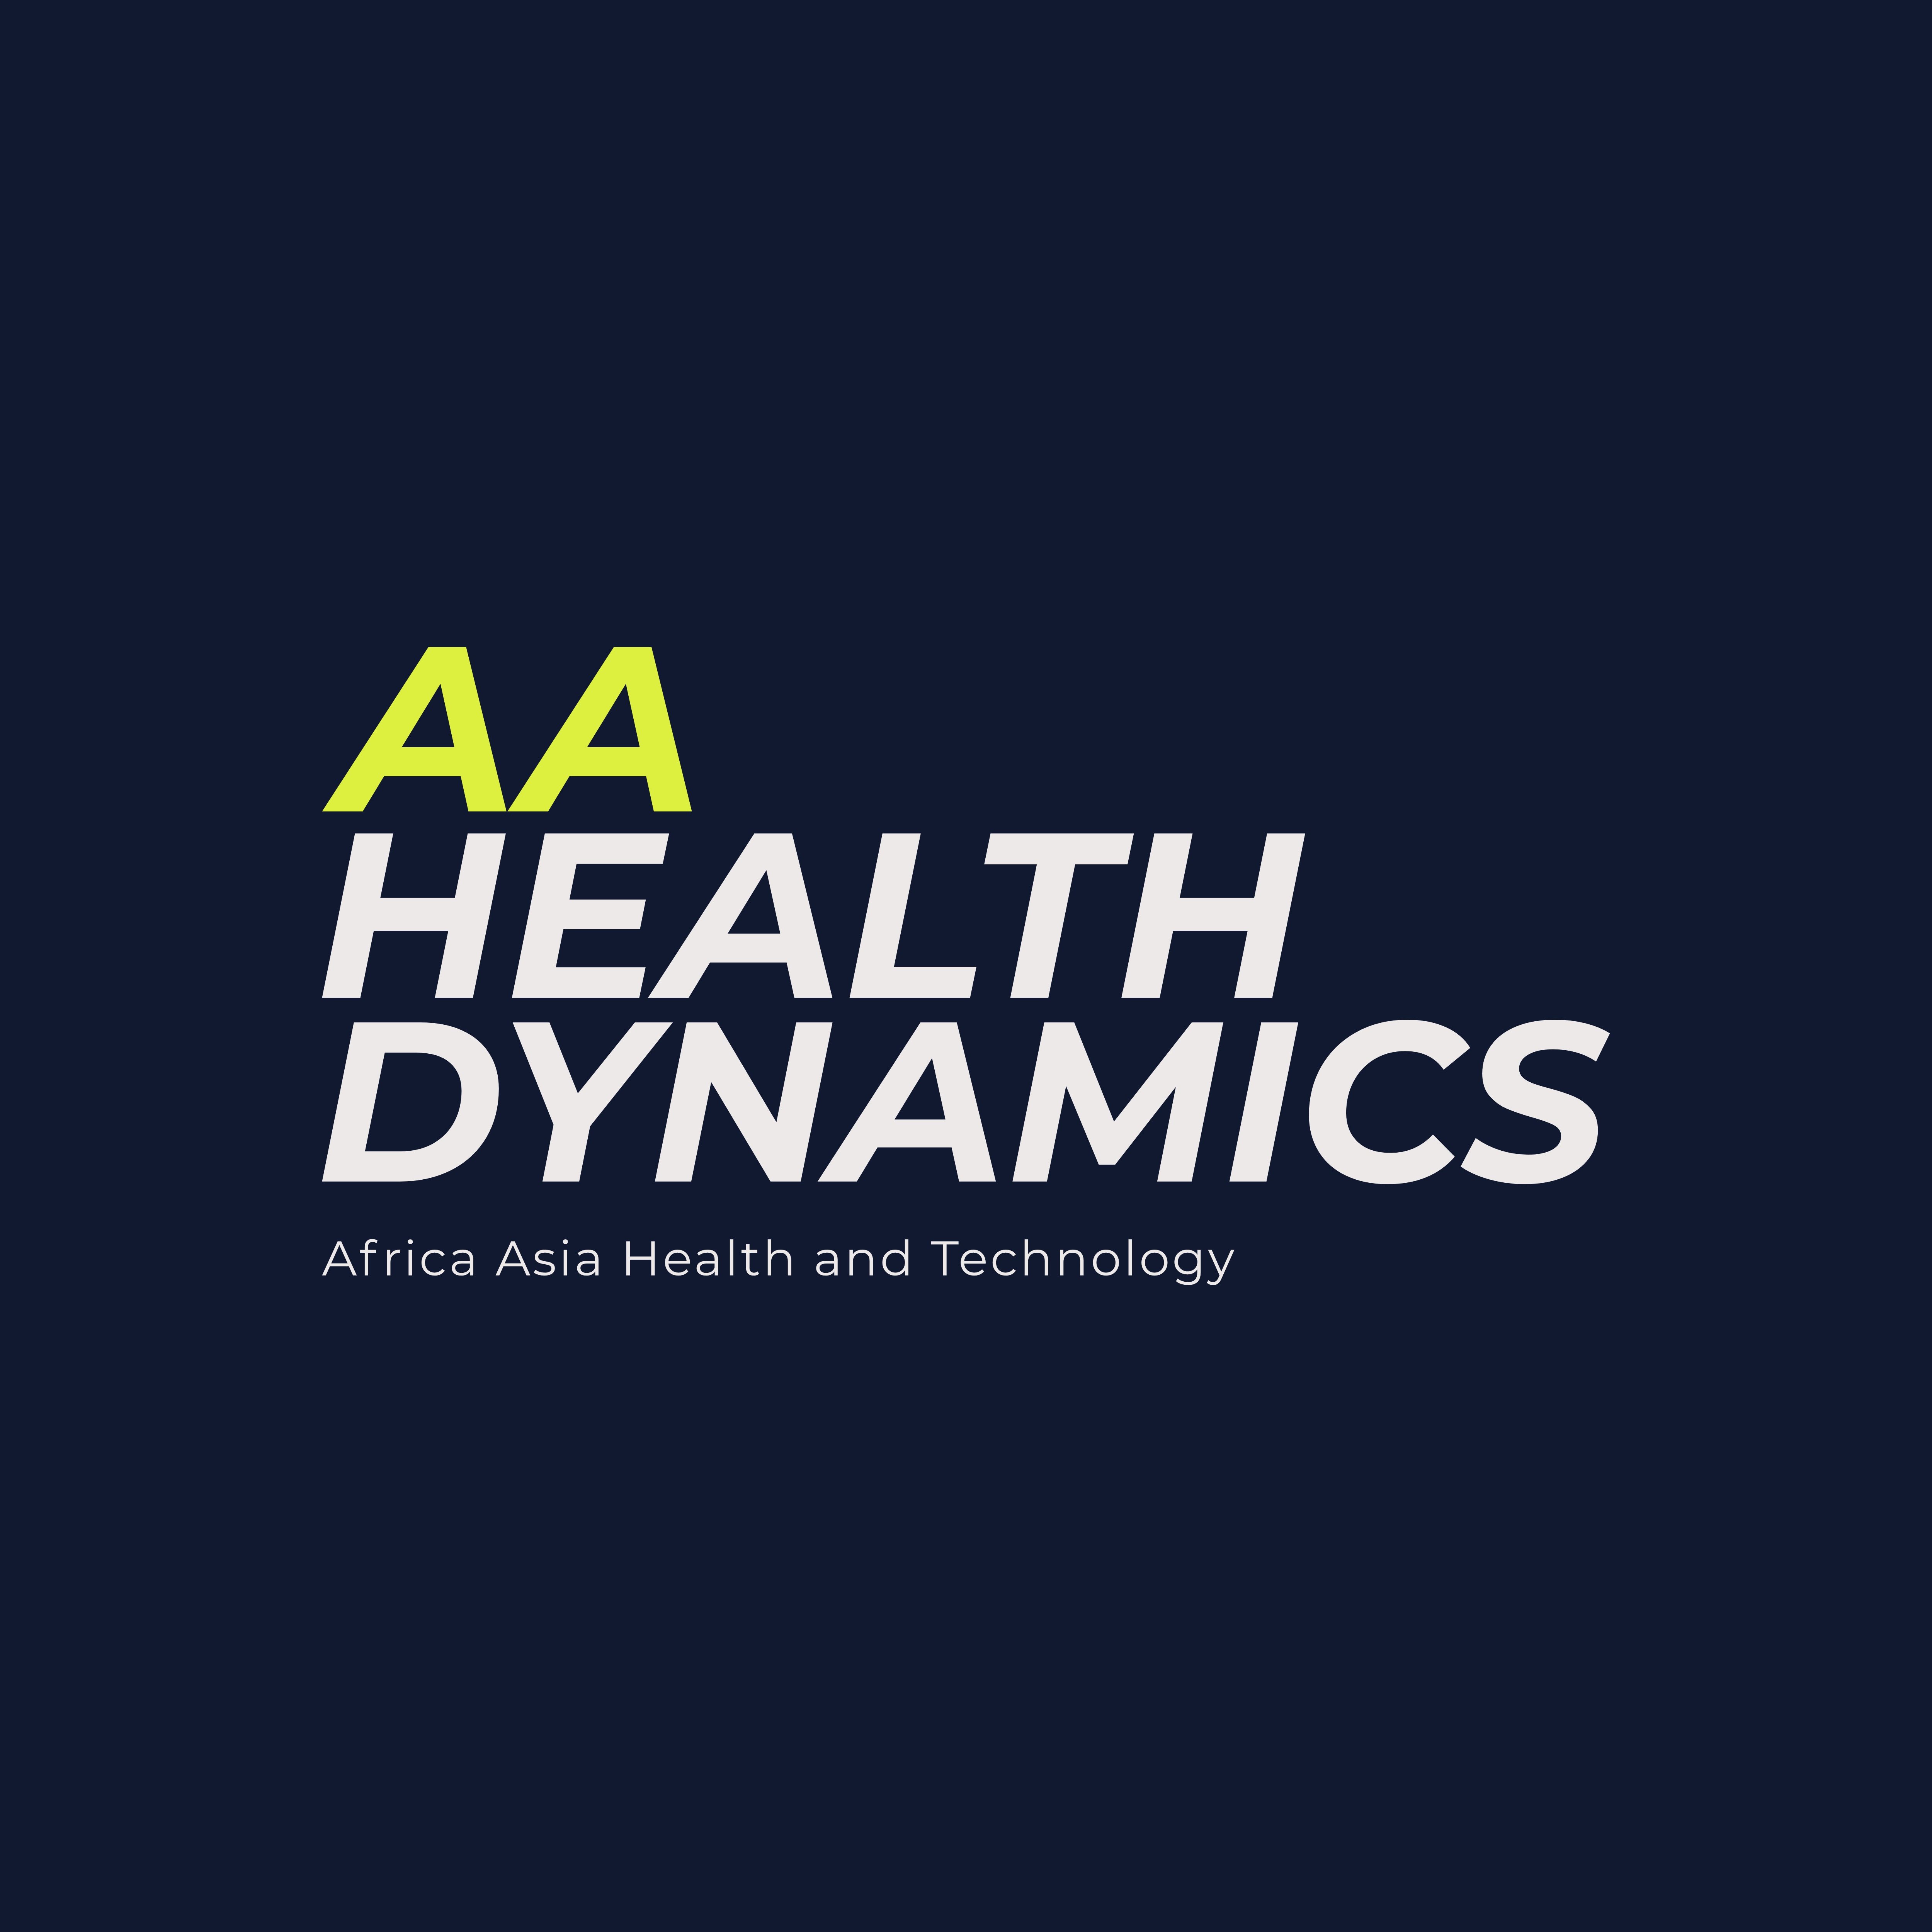 AA health dynamics株式会社